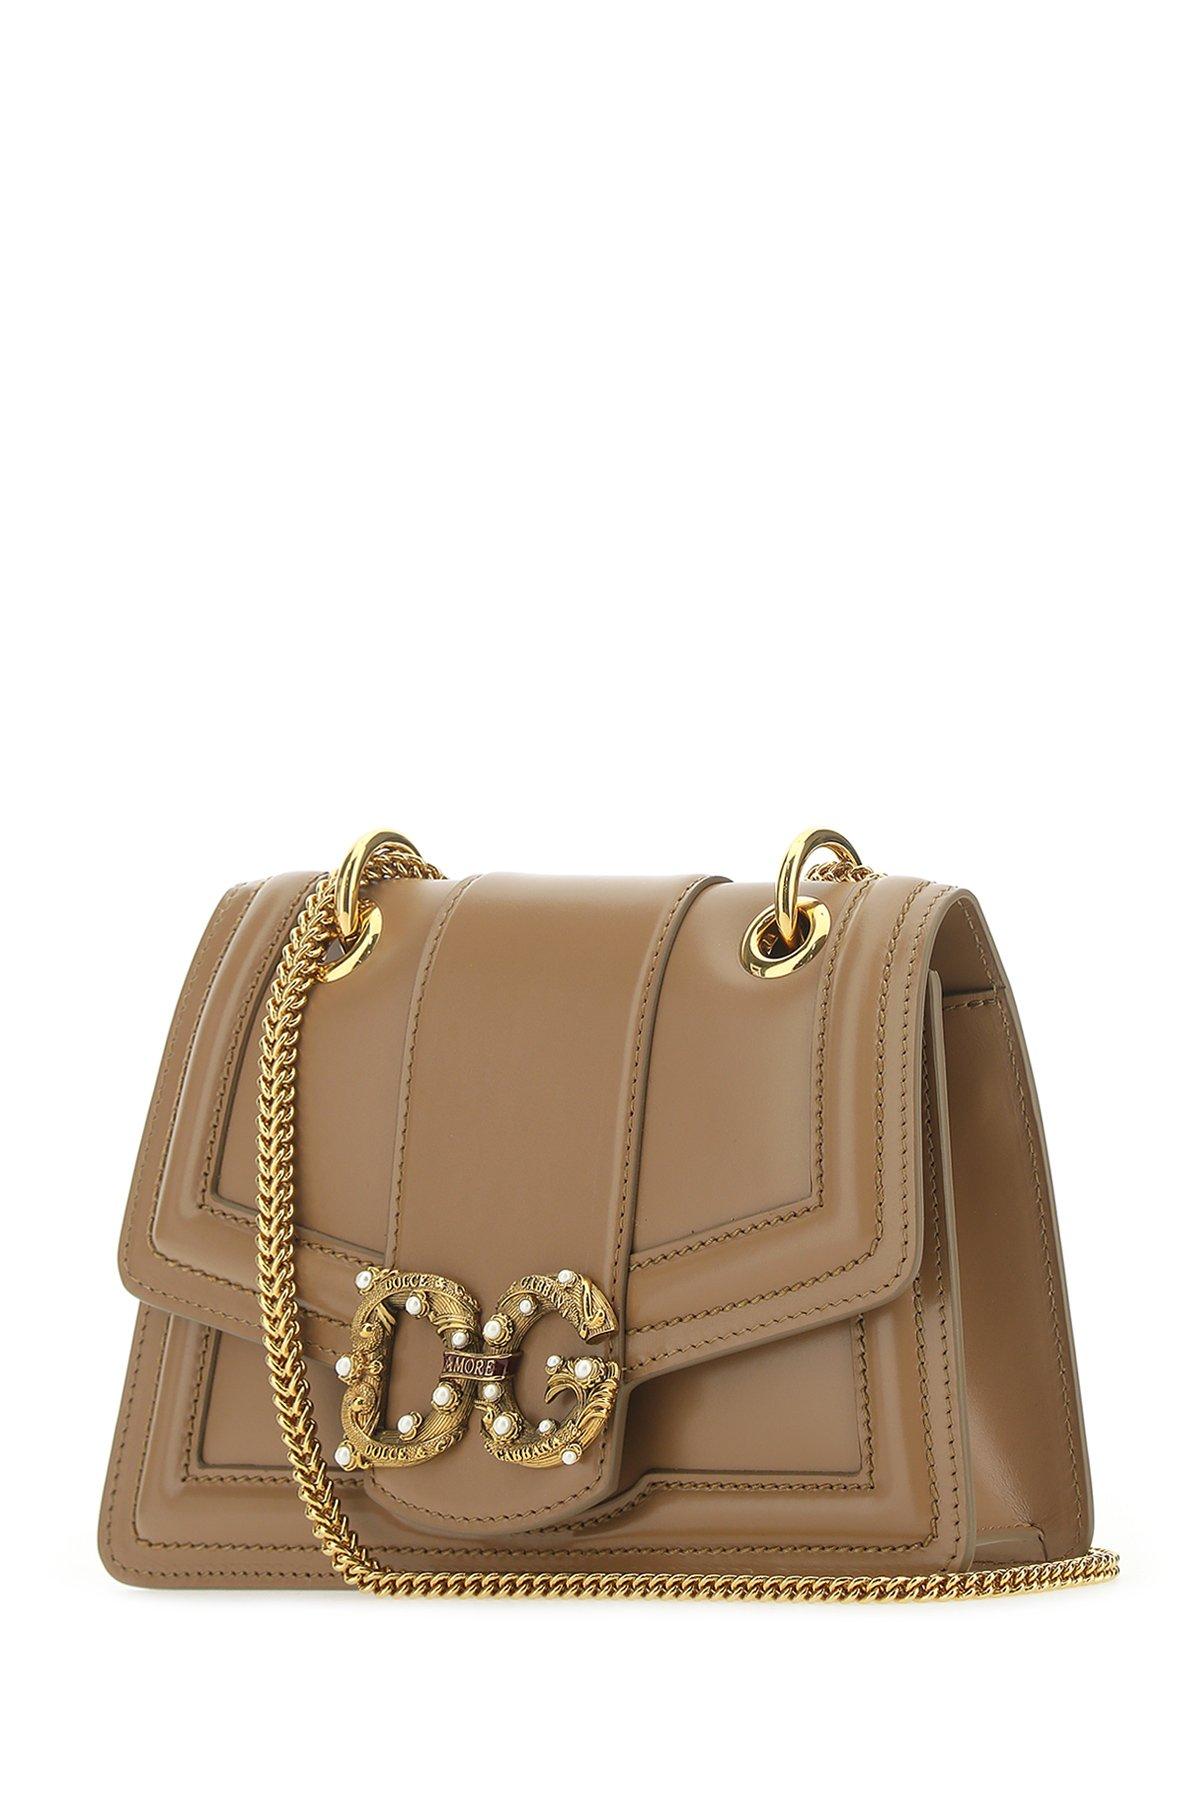 Dolce & Gabbana Leather Small Dg Amore Shoulder Bag in Beige (Natural ...